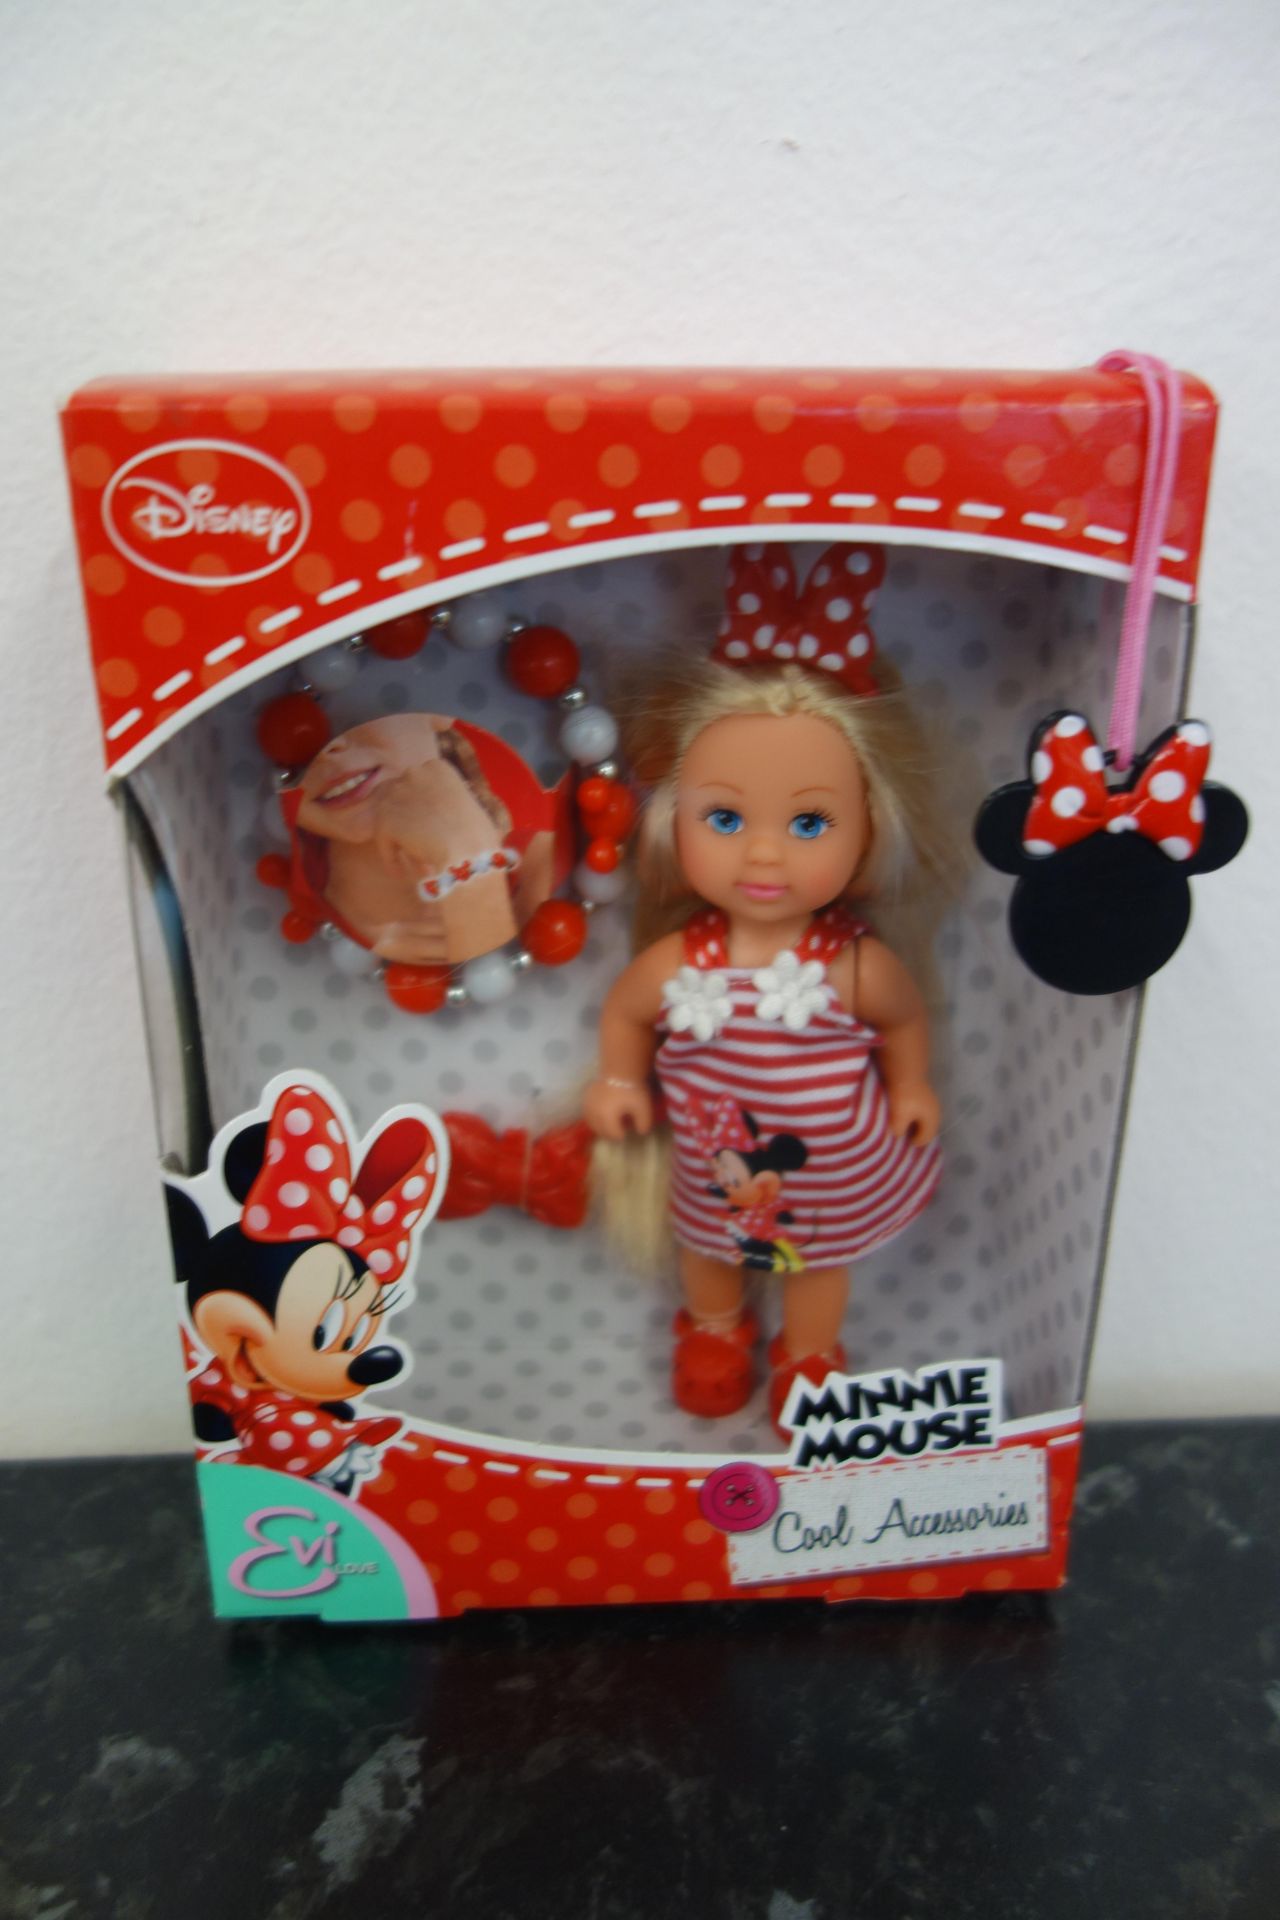 48 x Brand New - Disney Minnie Mouse Cool Accessories Doll & Bracelet Set